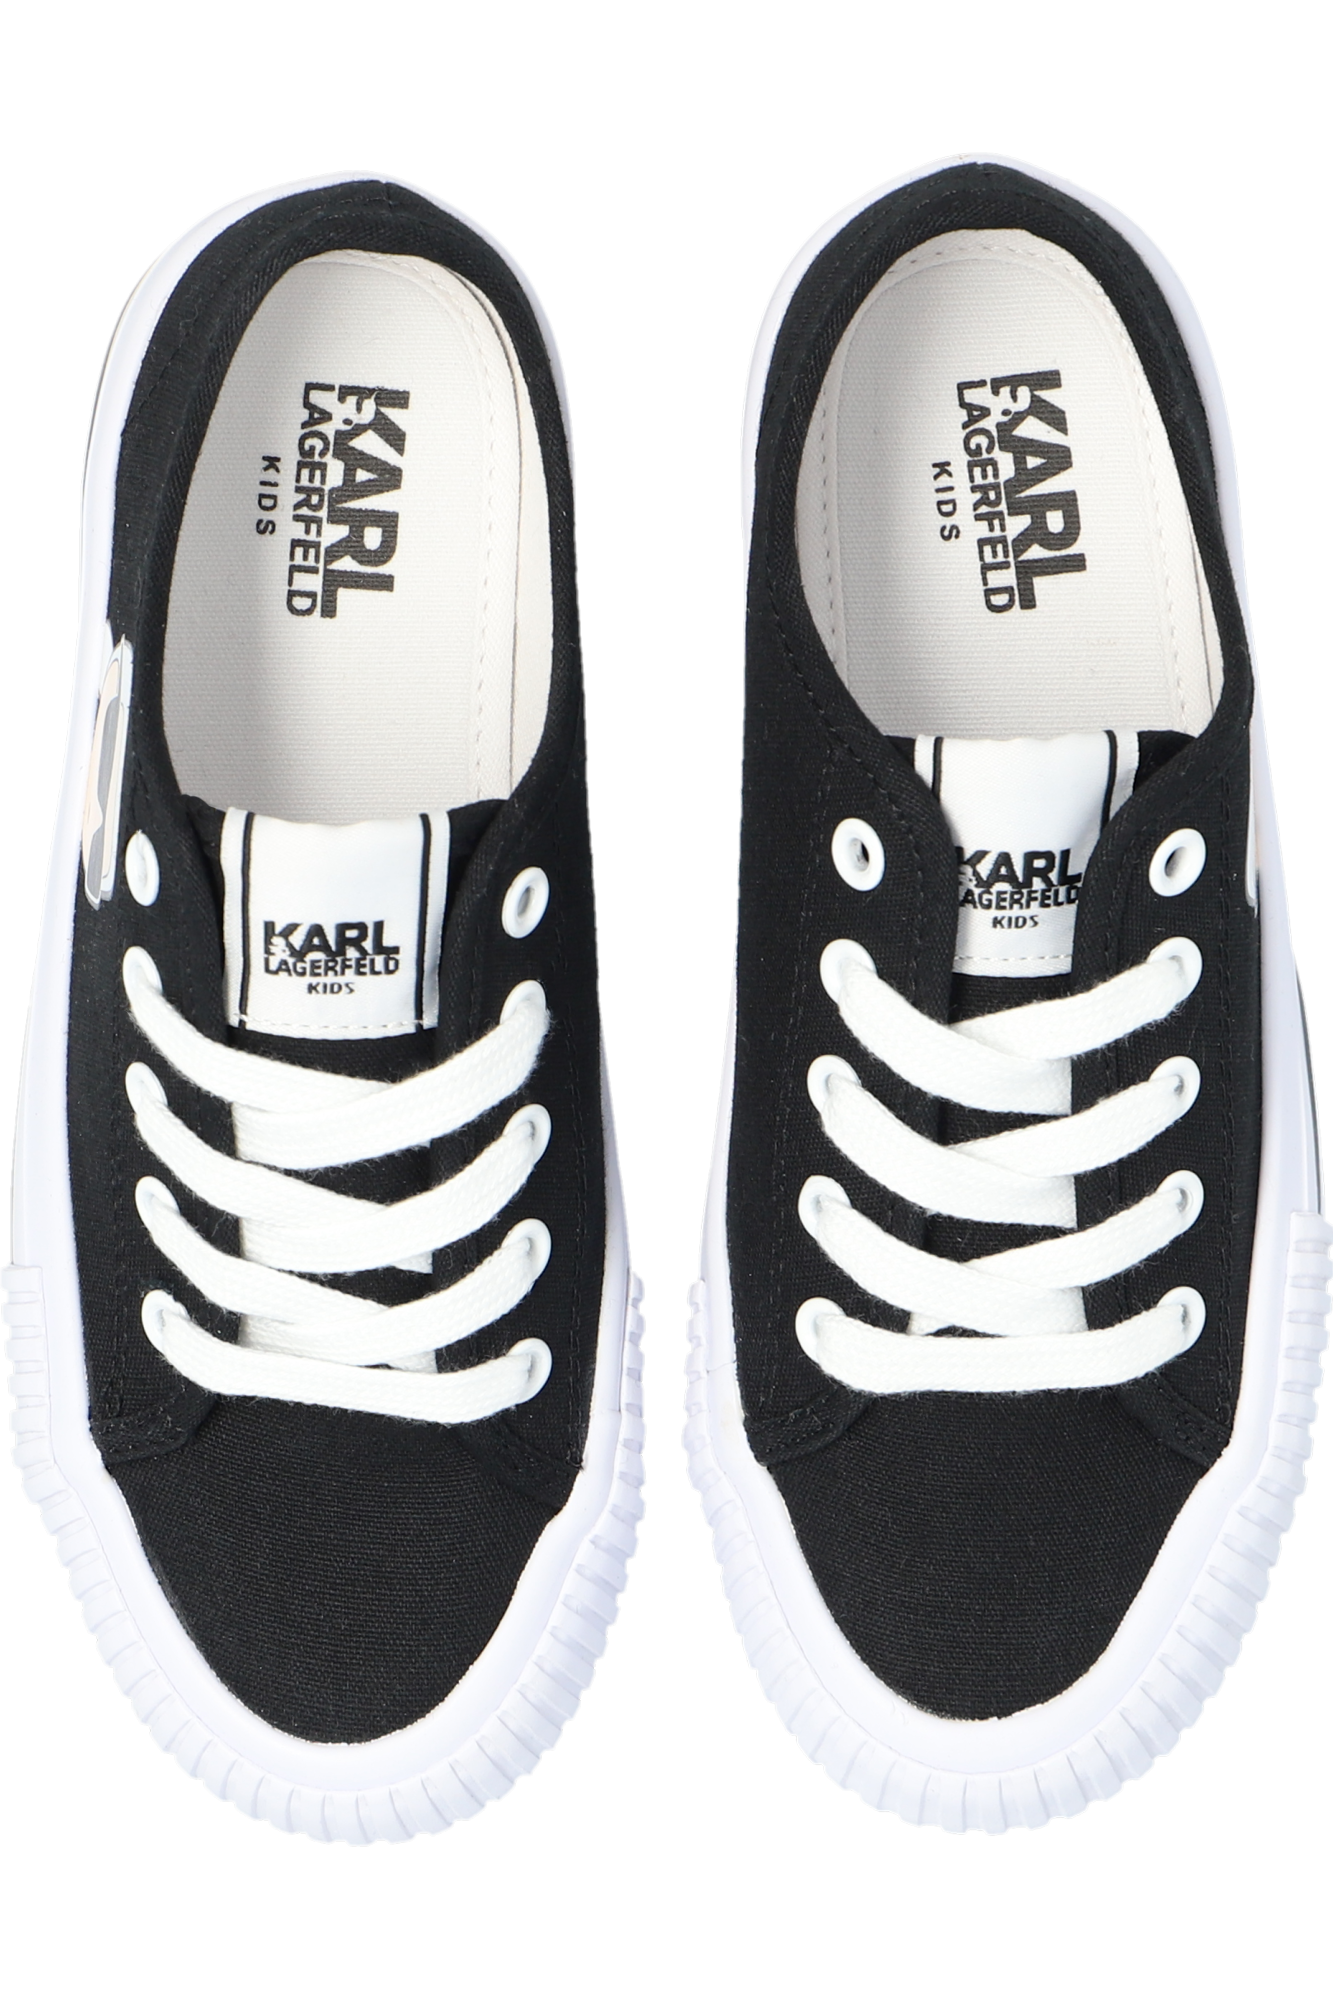 Karl Lagerfeld Kids women nike air max 2015 running shoe sku177537210 for sale